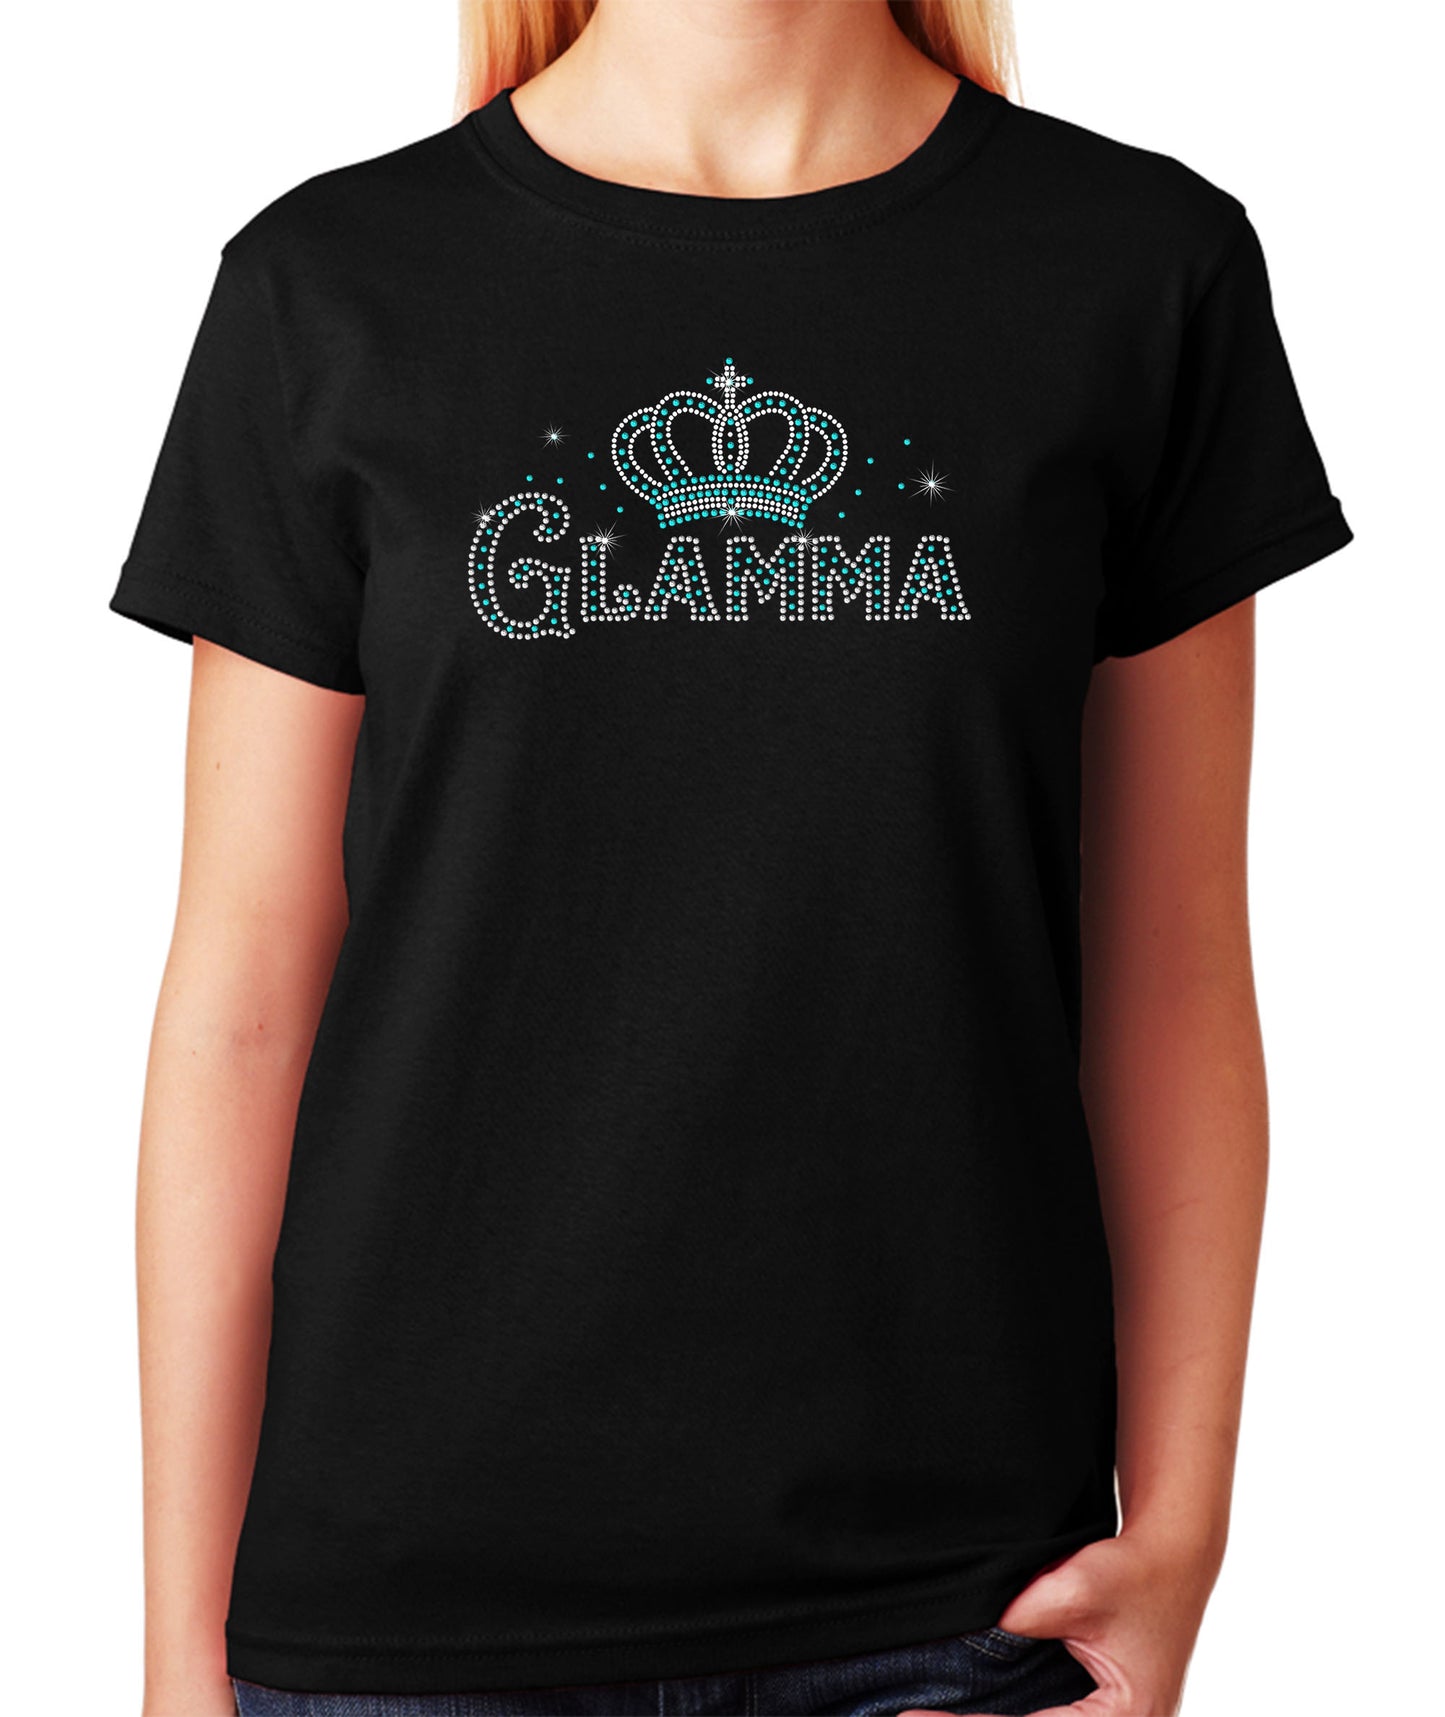 Women's / Unisex T-Shirt with Glamma with Crown in Rhinestones